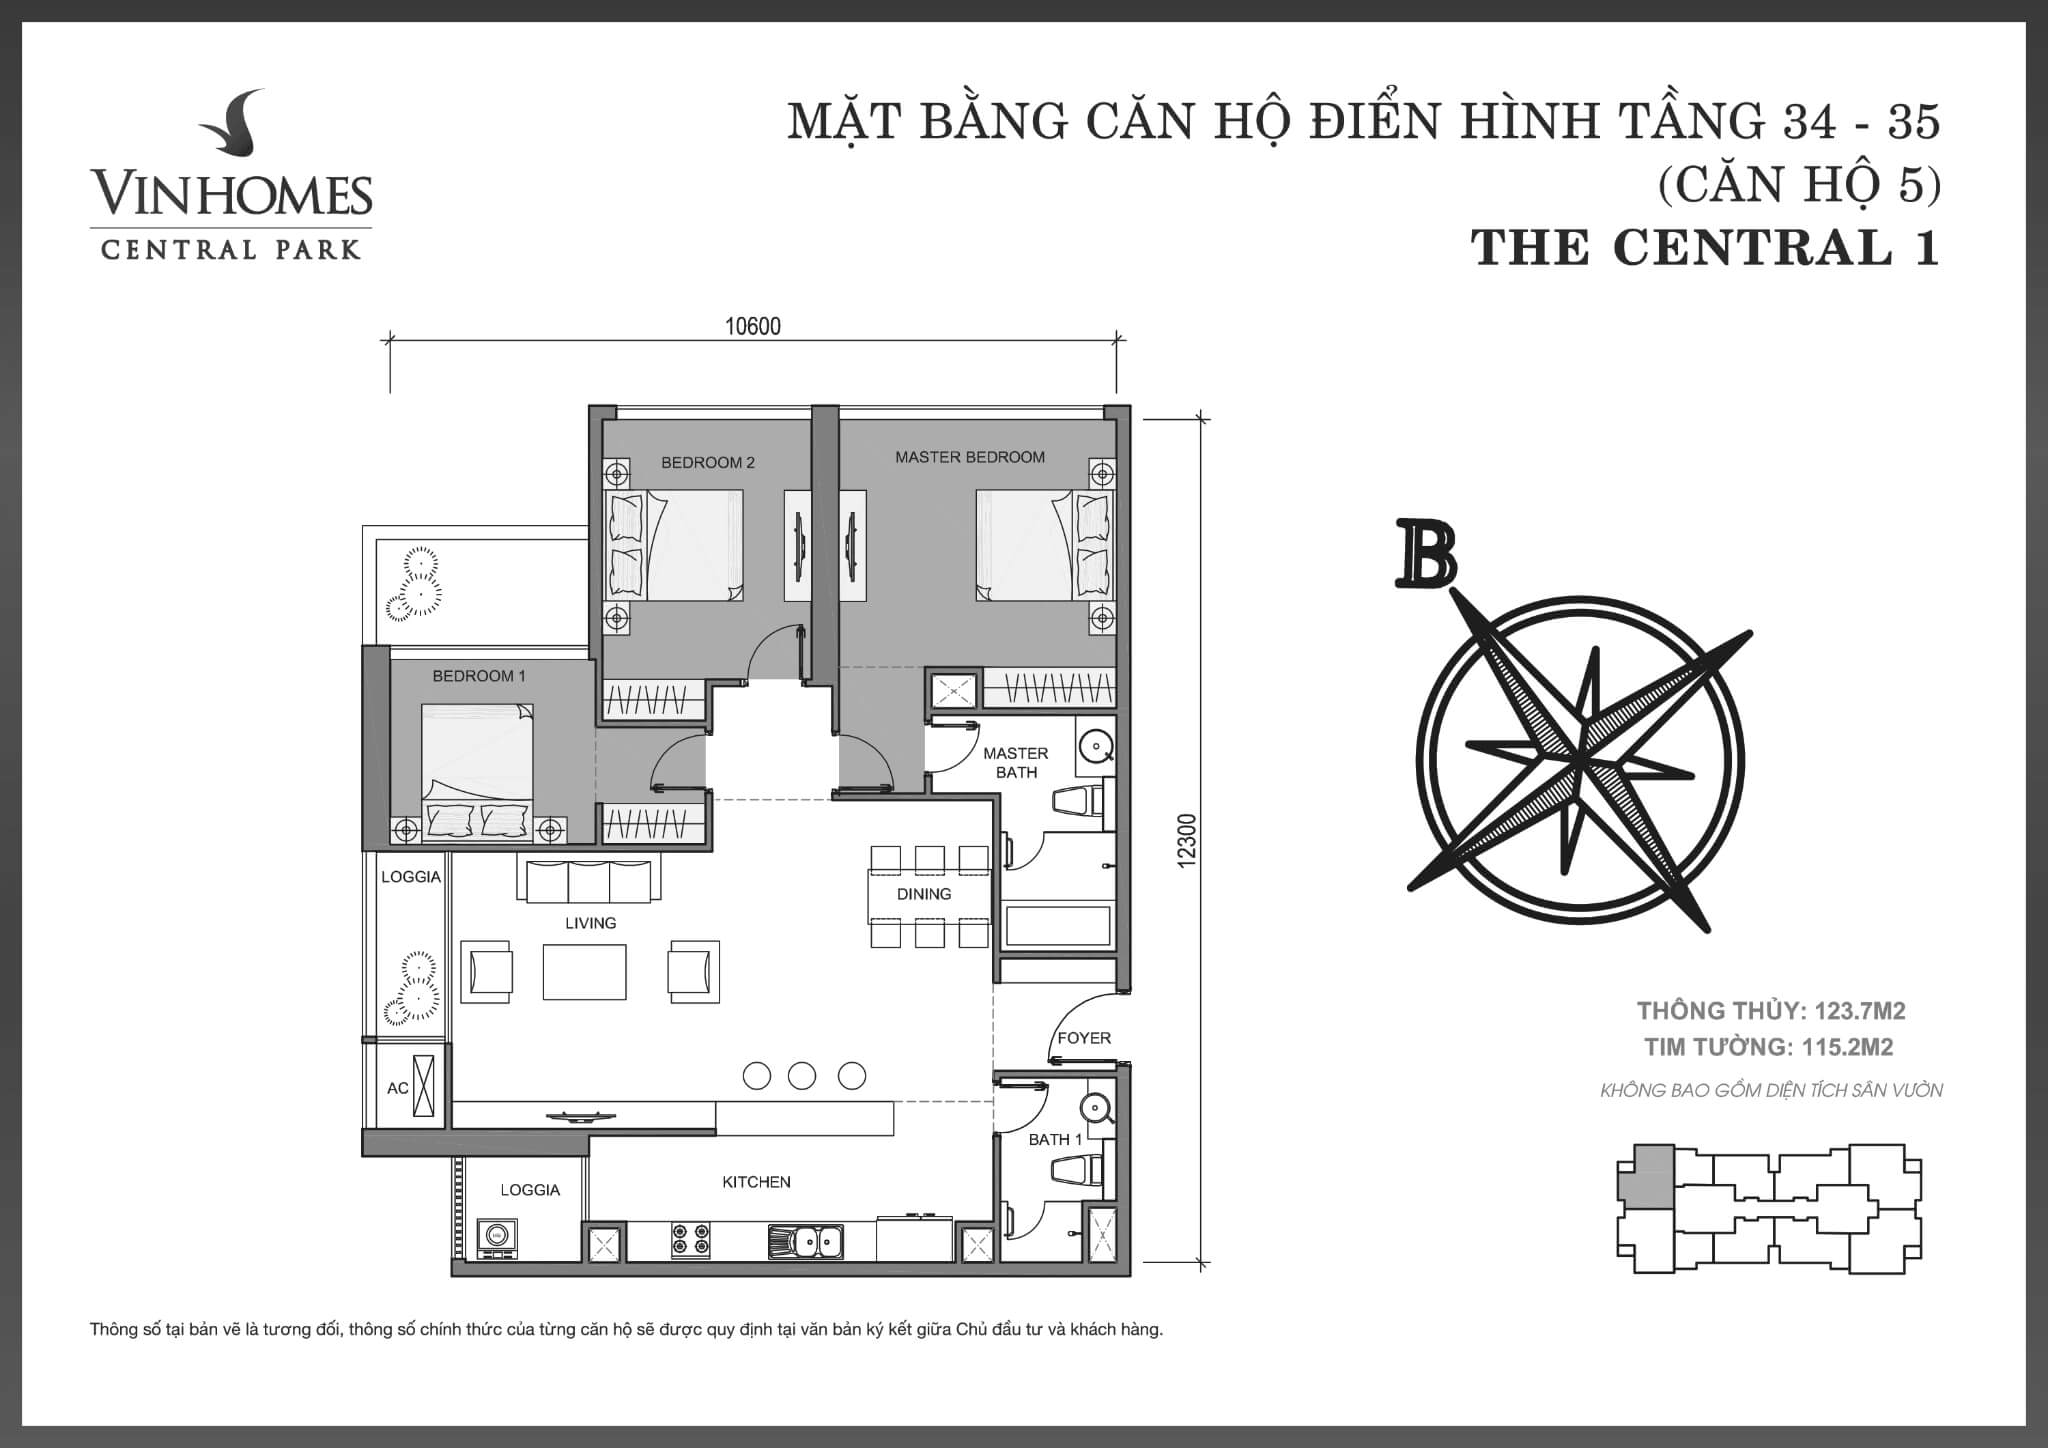 Layout căn hộ số 05 tầng 34-35 tòa The Central 1 - Mặt bằng Vinhomes Central Park